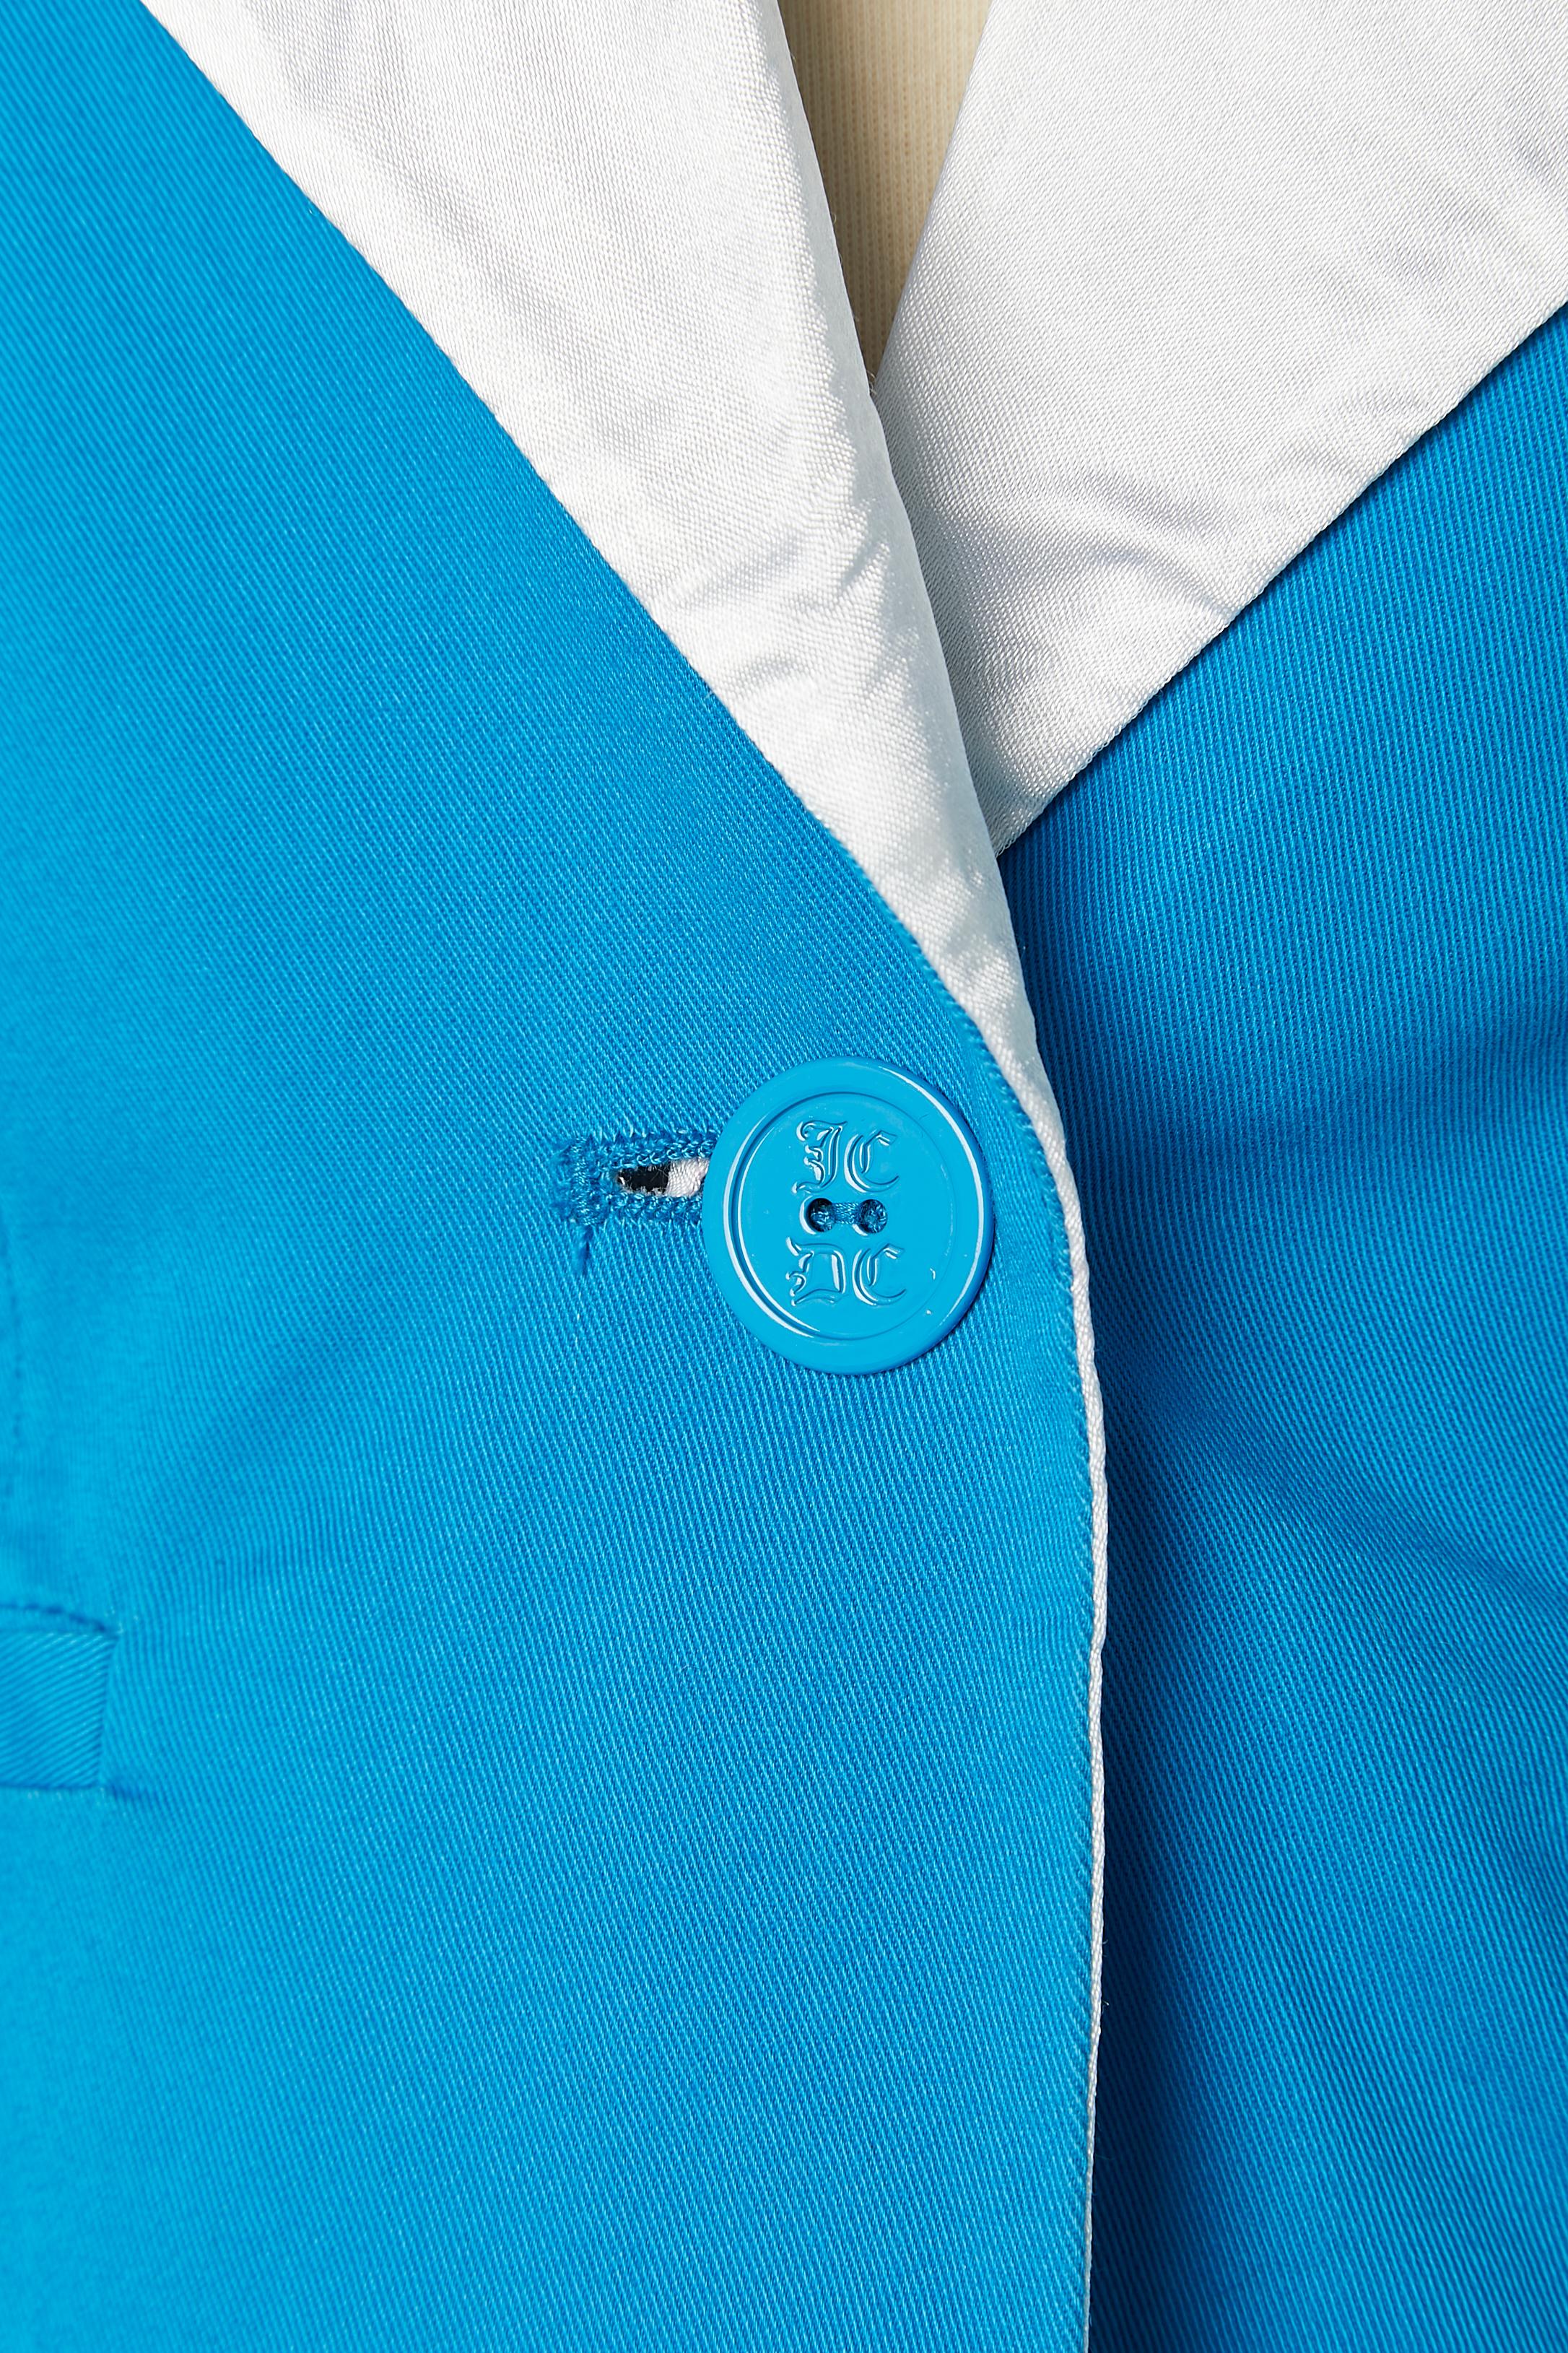 Blue cotton jacket with a white heart collar JC/DC (Jean-Charles de Castelbajac) In Good Condition For Sale In Saint-Ouen-Sur-Seine, FR